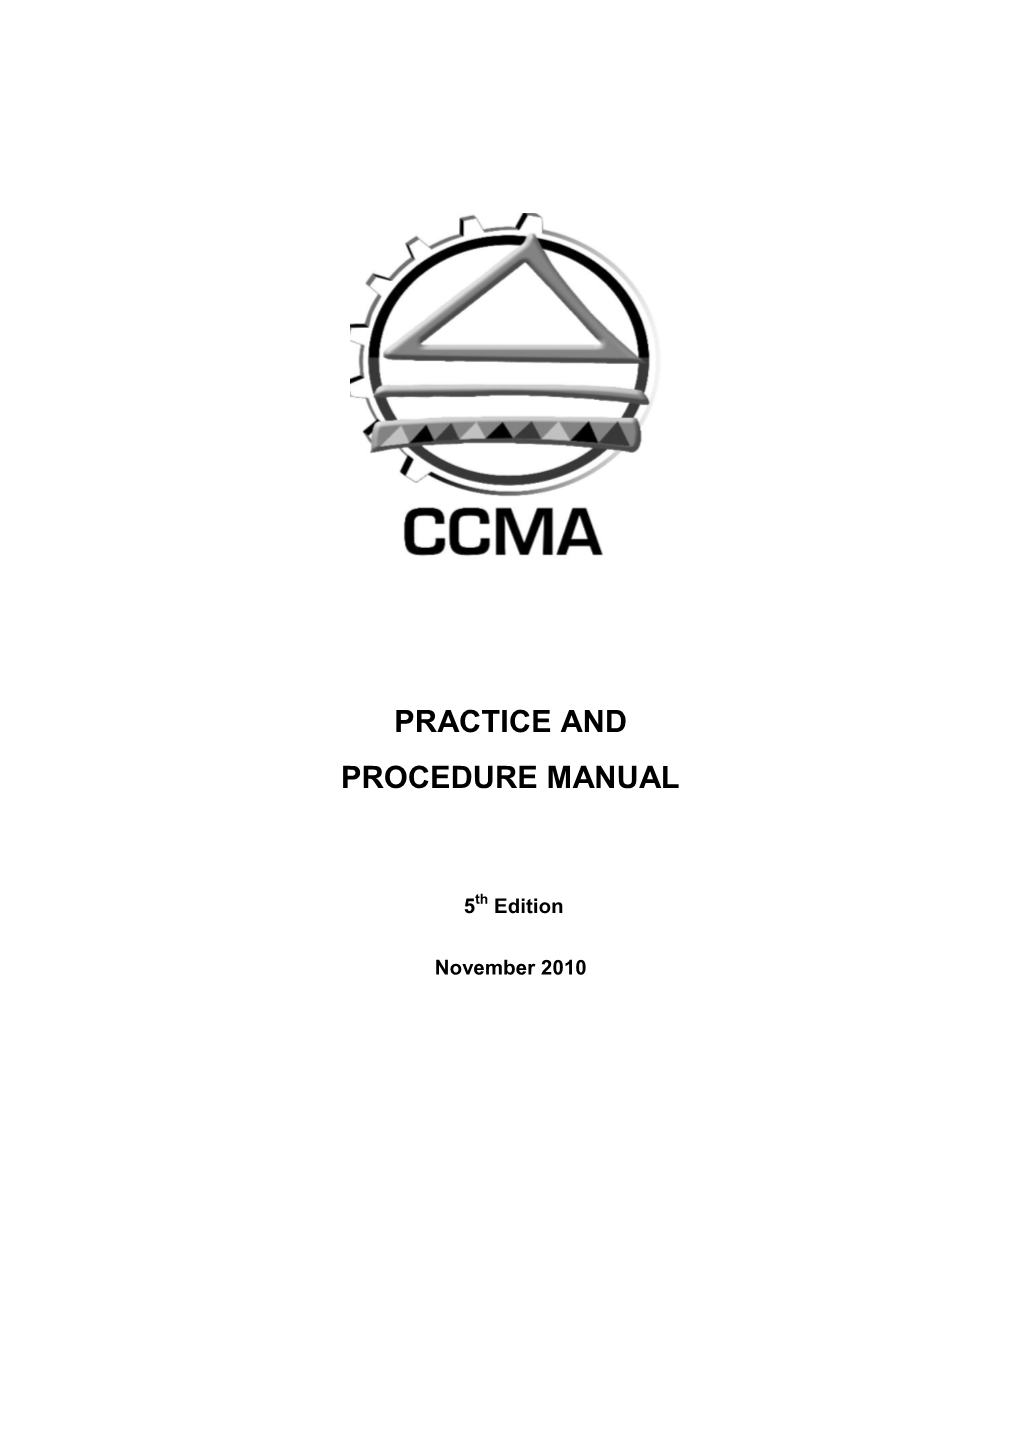 Practice and Procedure Manual